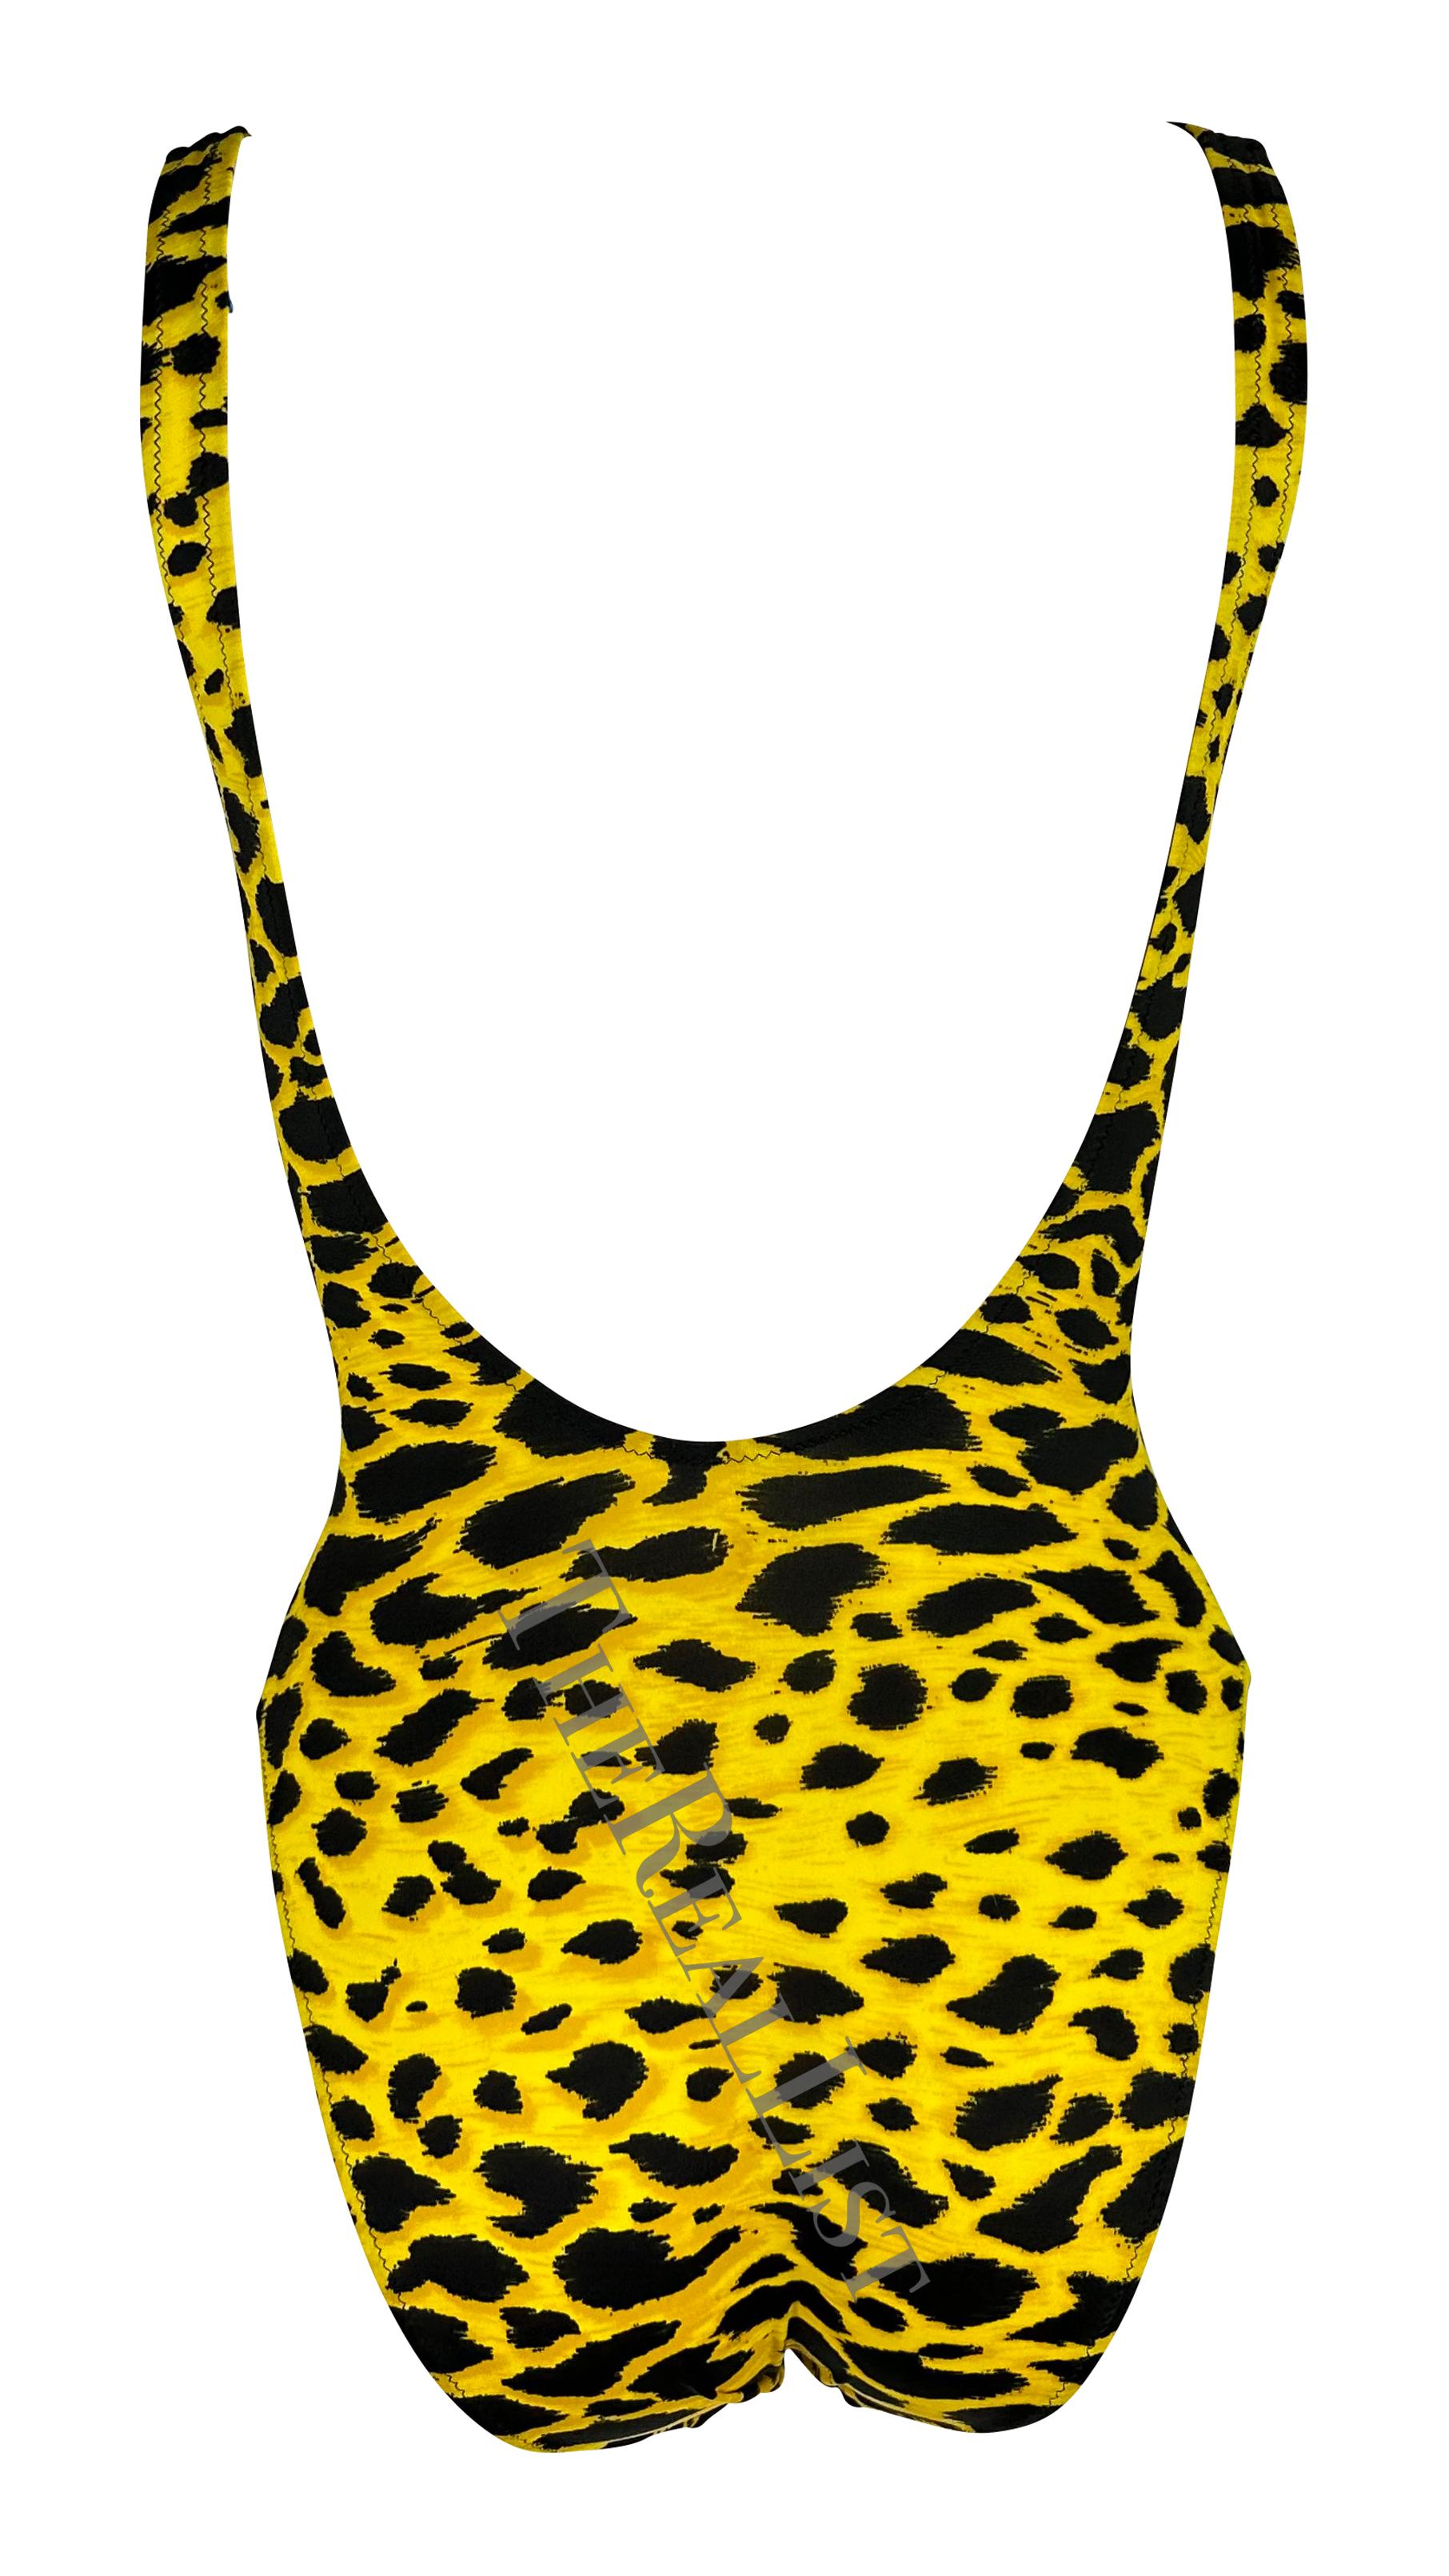 S/S 1992 Gianni Versace Yellow Cheetah Print One Piece Swim Body Suit For Sale 2